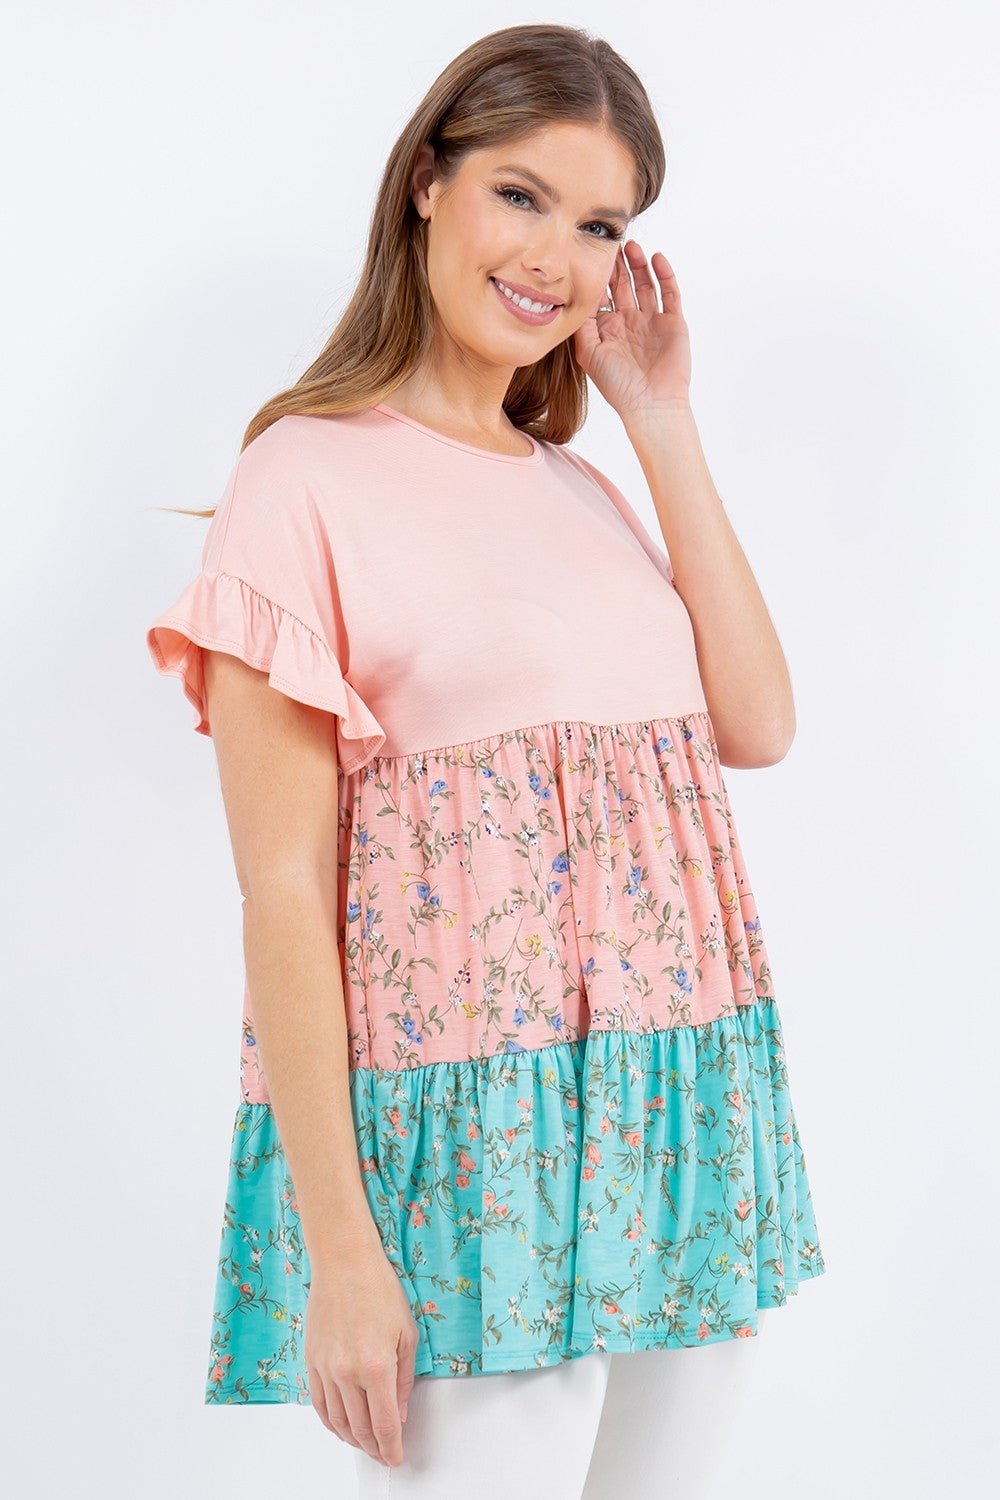 Floral Color Block Ruffled Short Sleeve Top in Peach MintTopCeleste Design